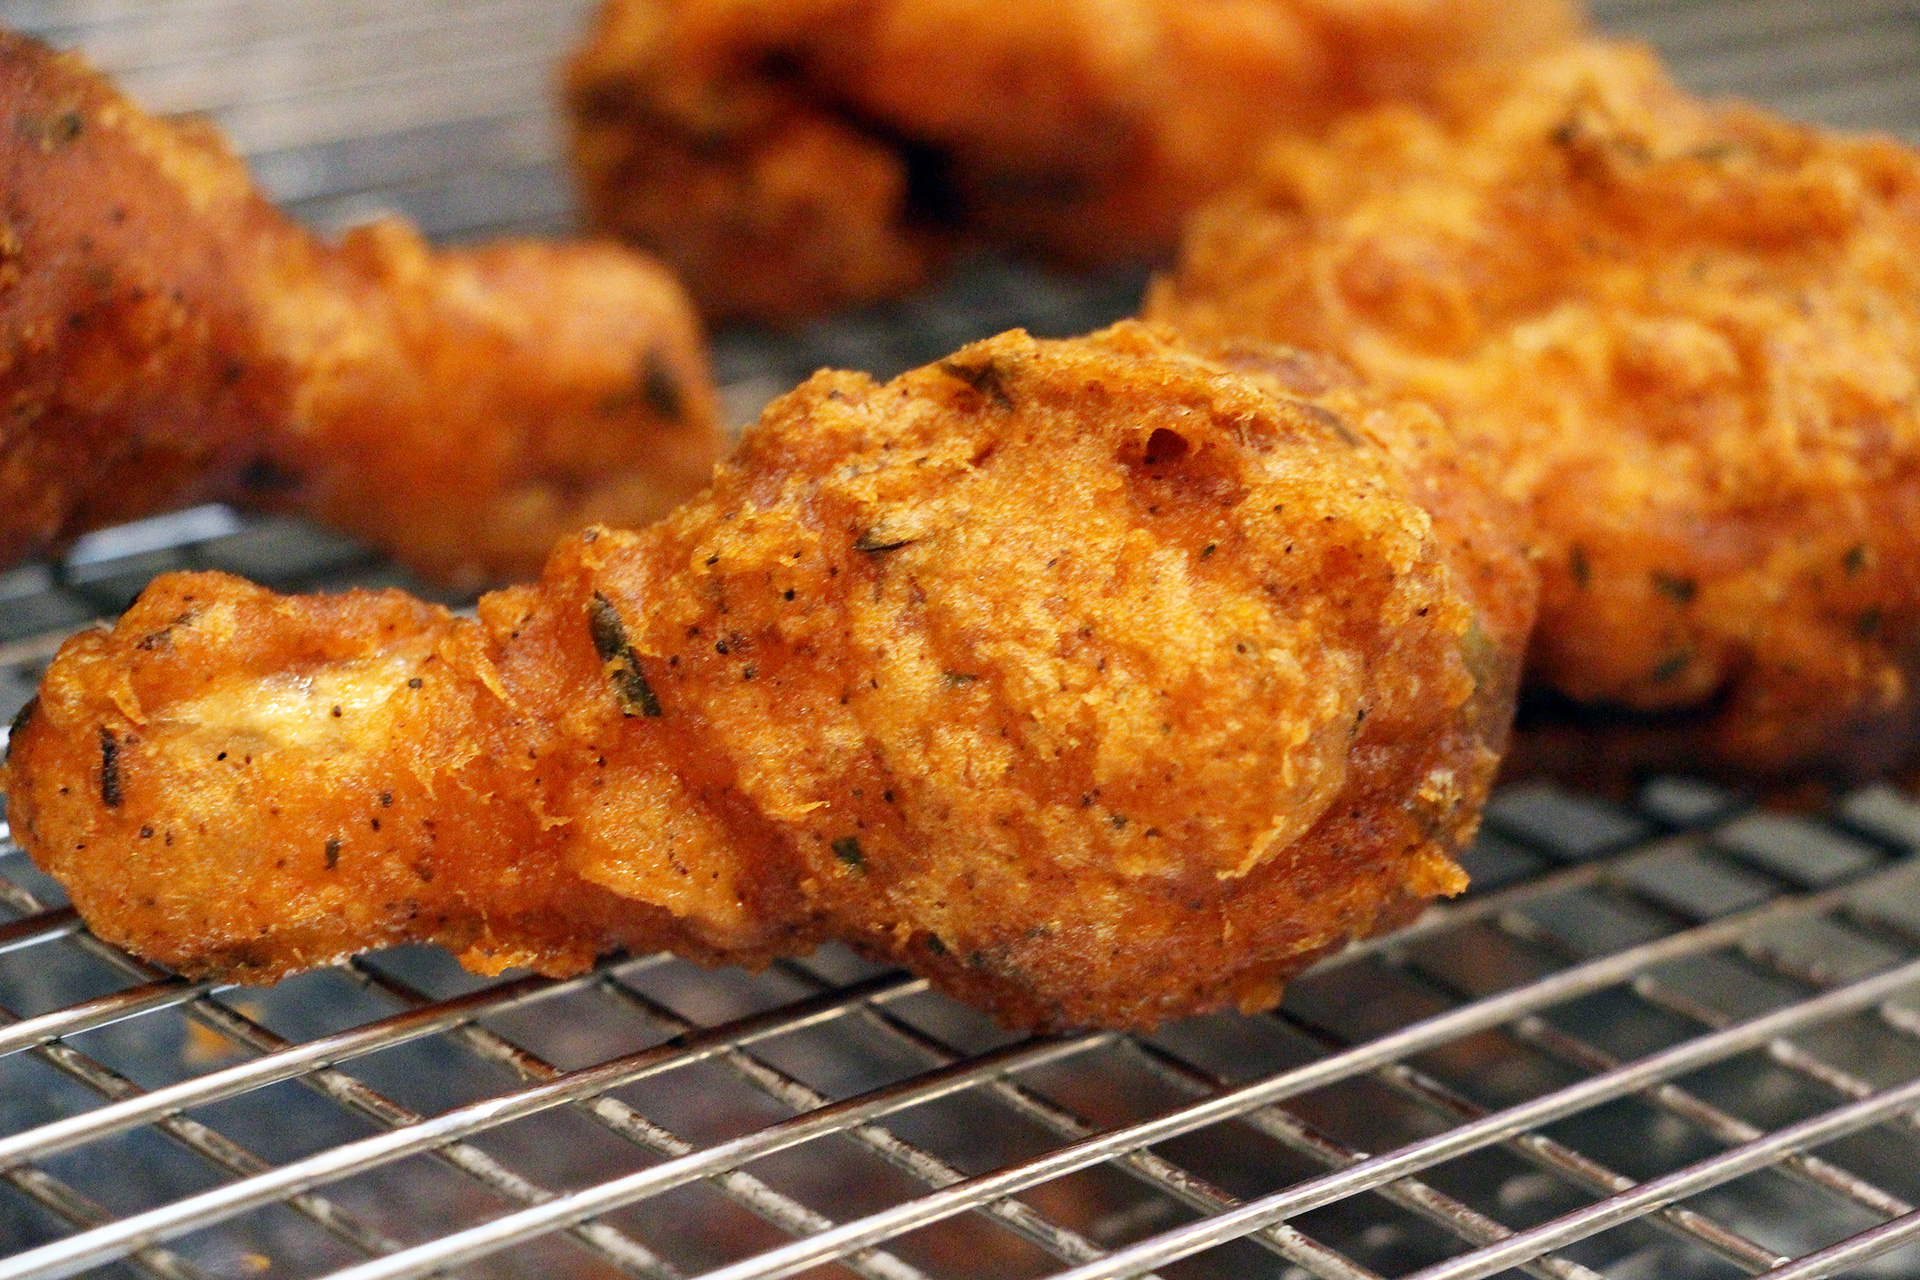 Fried Chicken at Proposition Chicken